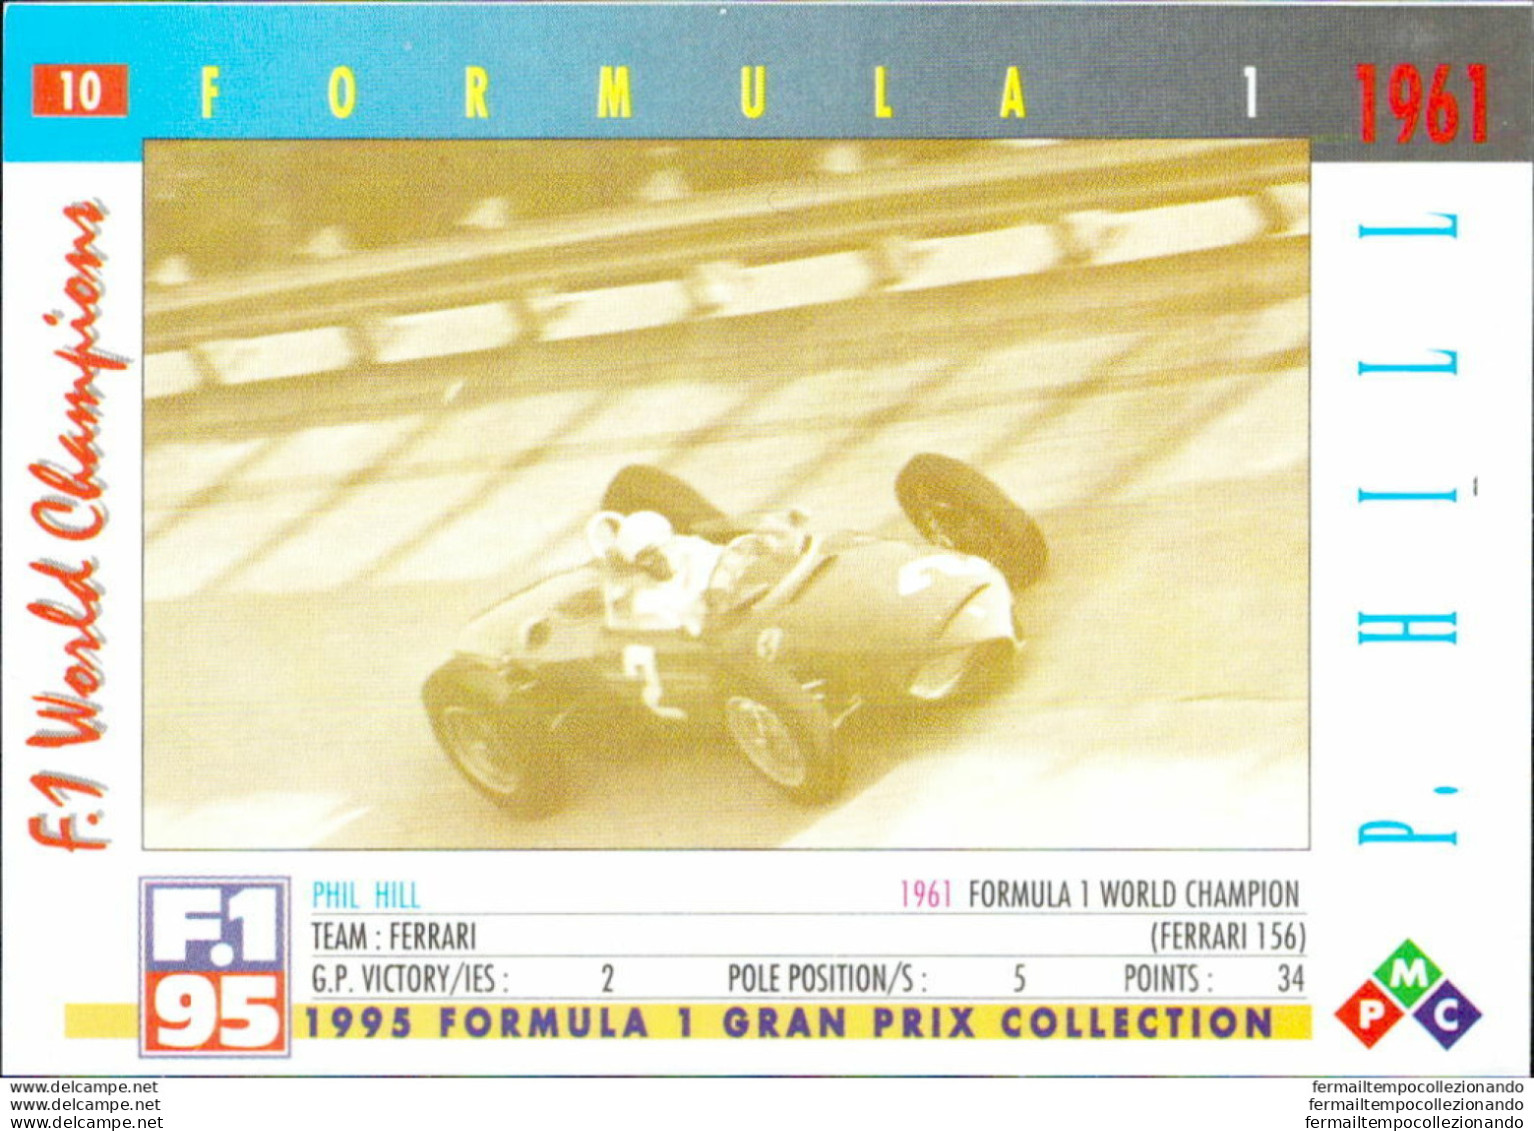 Bh10 1995 Formula 1 Gran Prix Collection Card P.hill N 10 - Catalogus